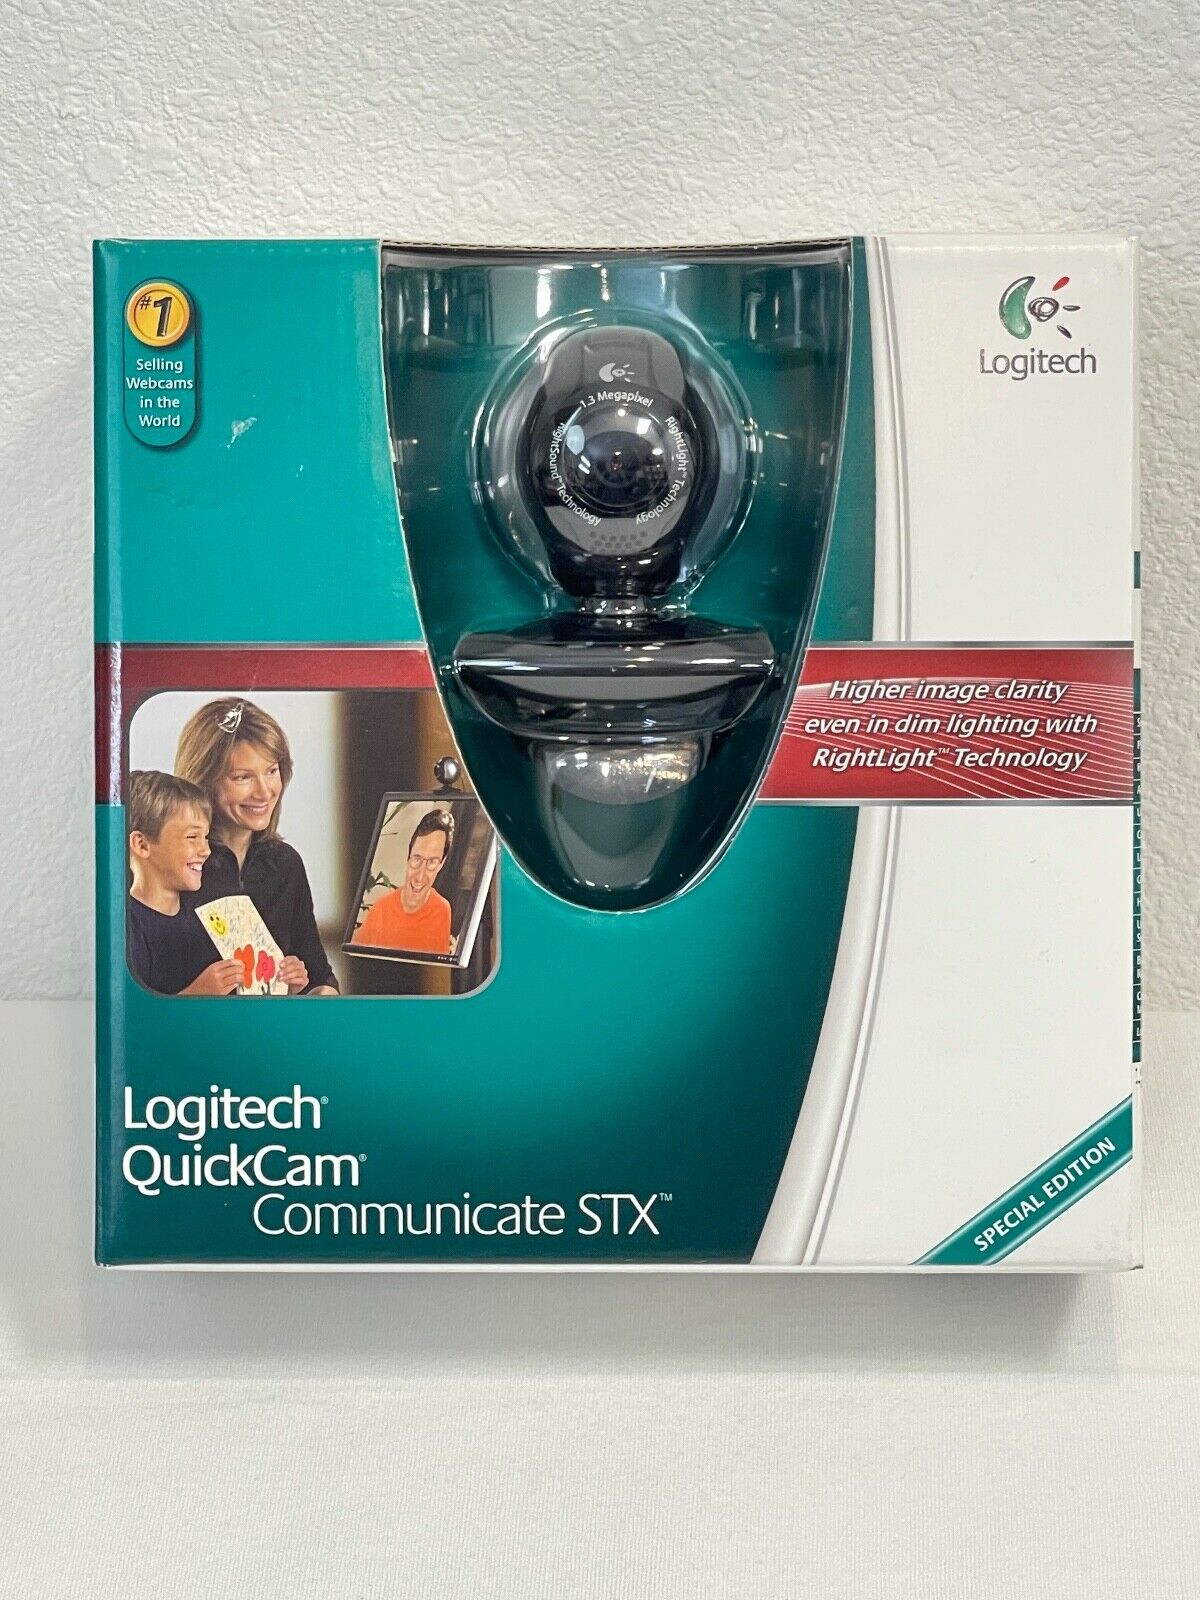 NEW Logitech QuickCam Communicate STX Webcam Special Edition 1.3 MP USB 2.0